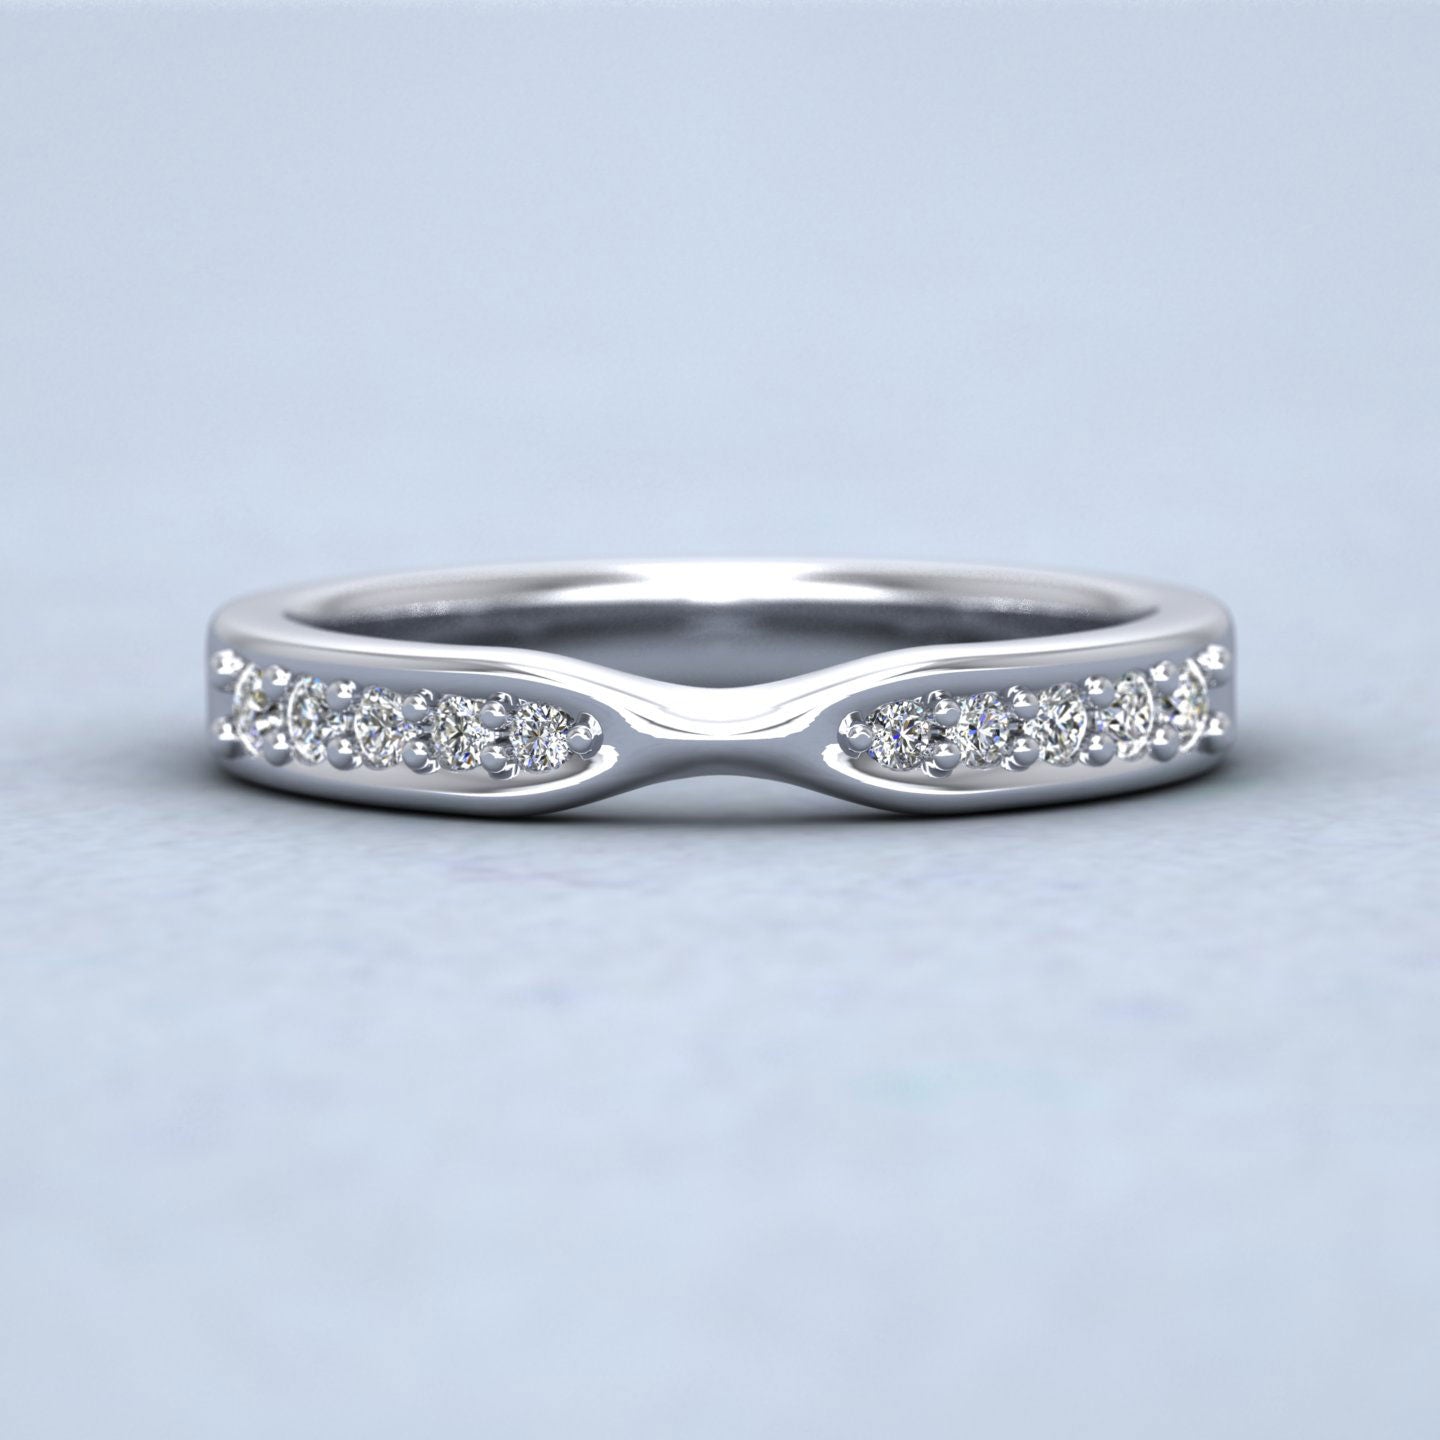 Pinch Design Wedding Ring With Diamonds 18ct White Gold 3mm Wedding Ring